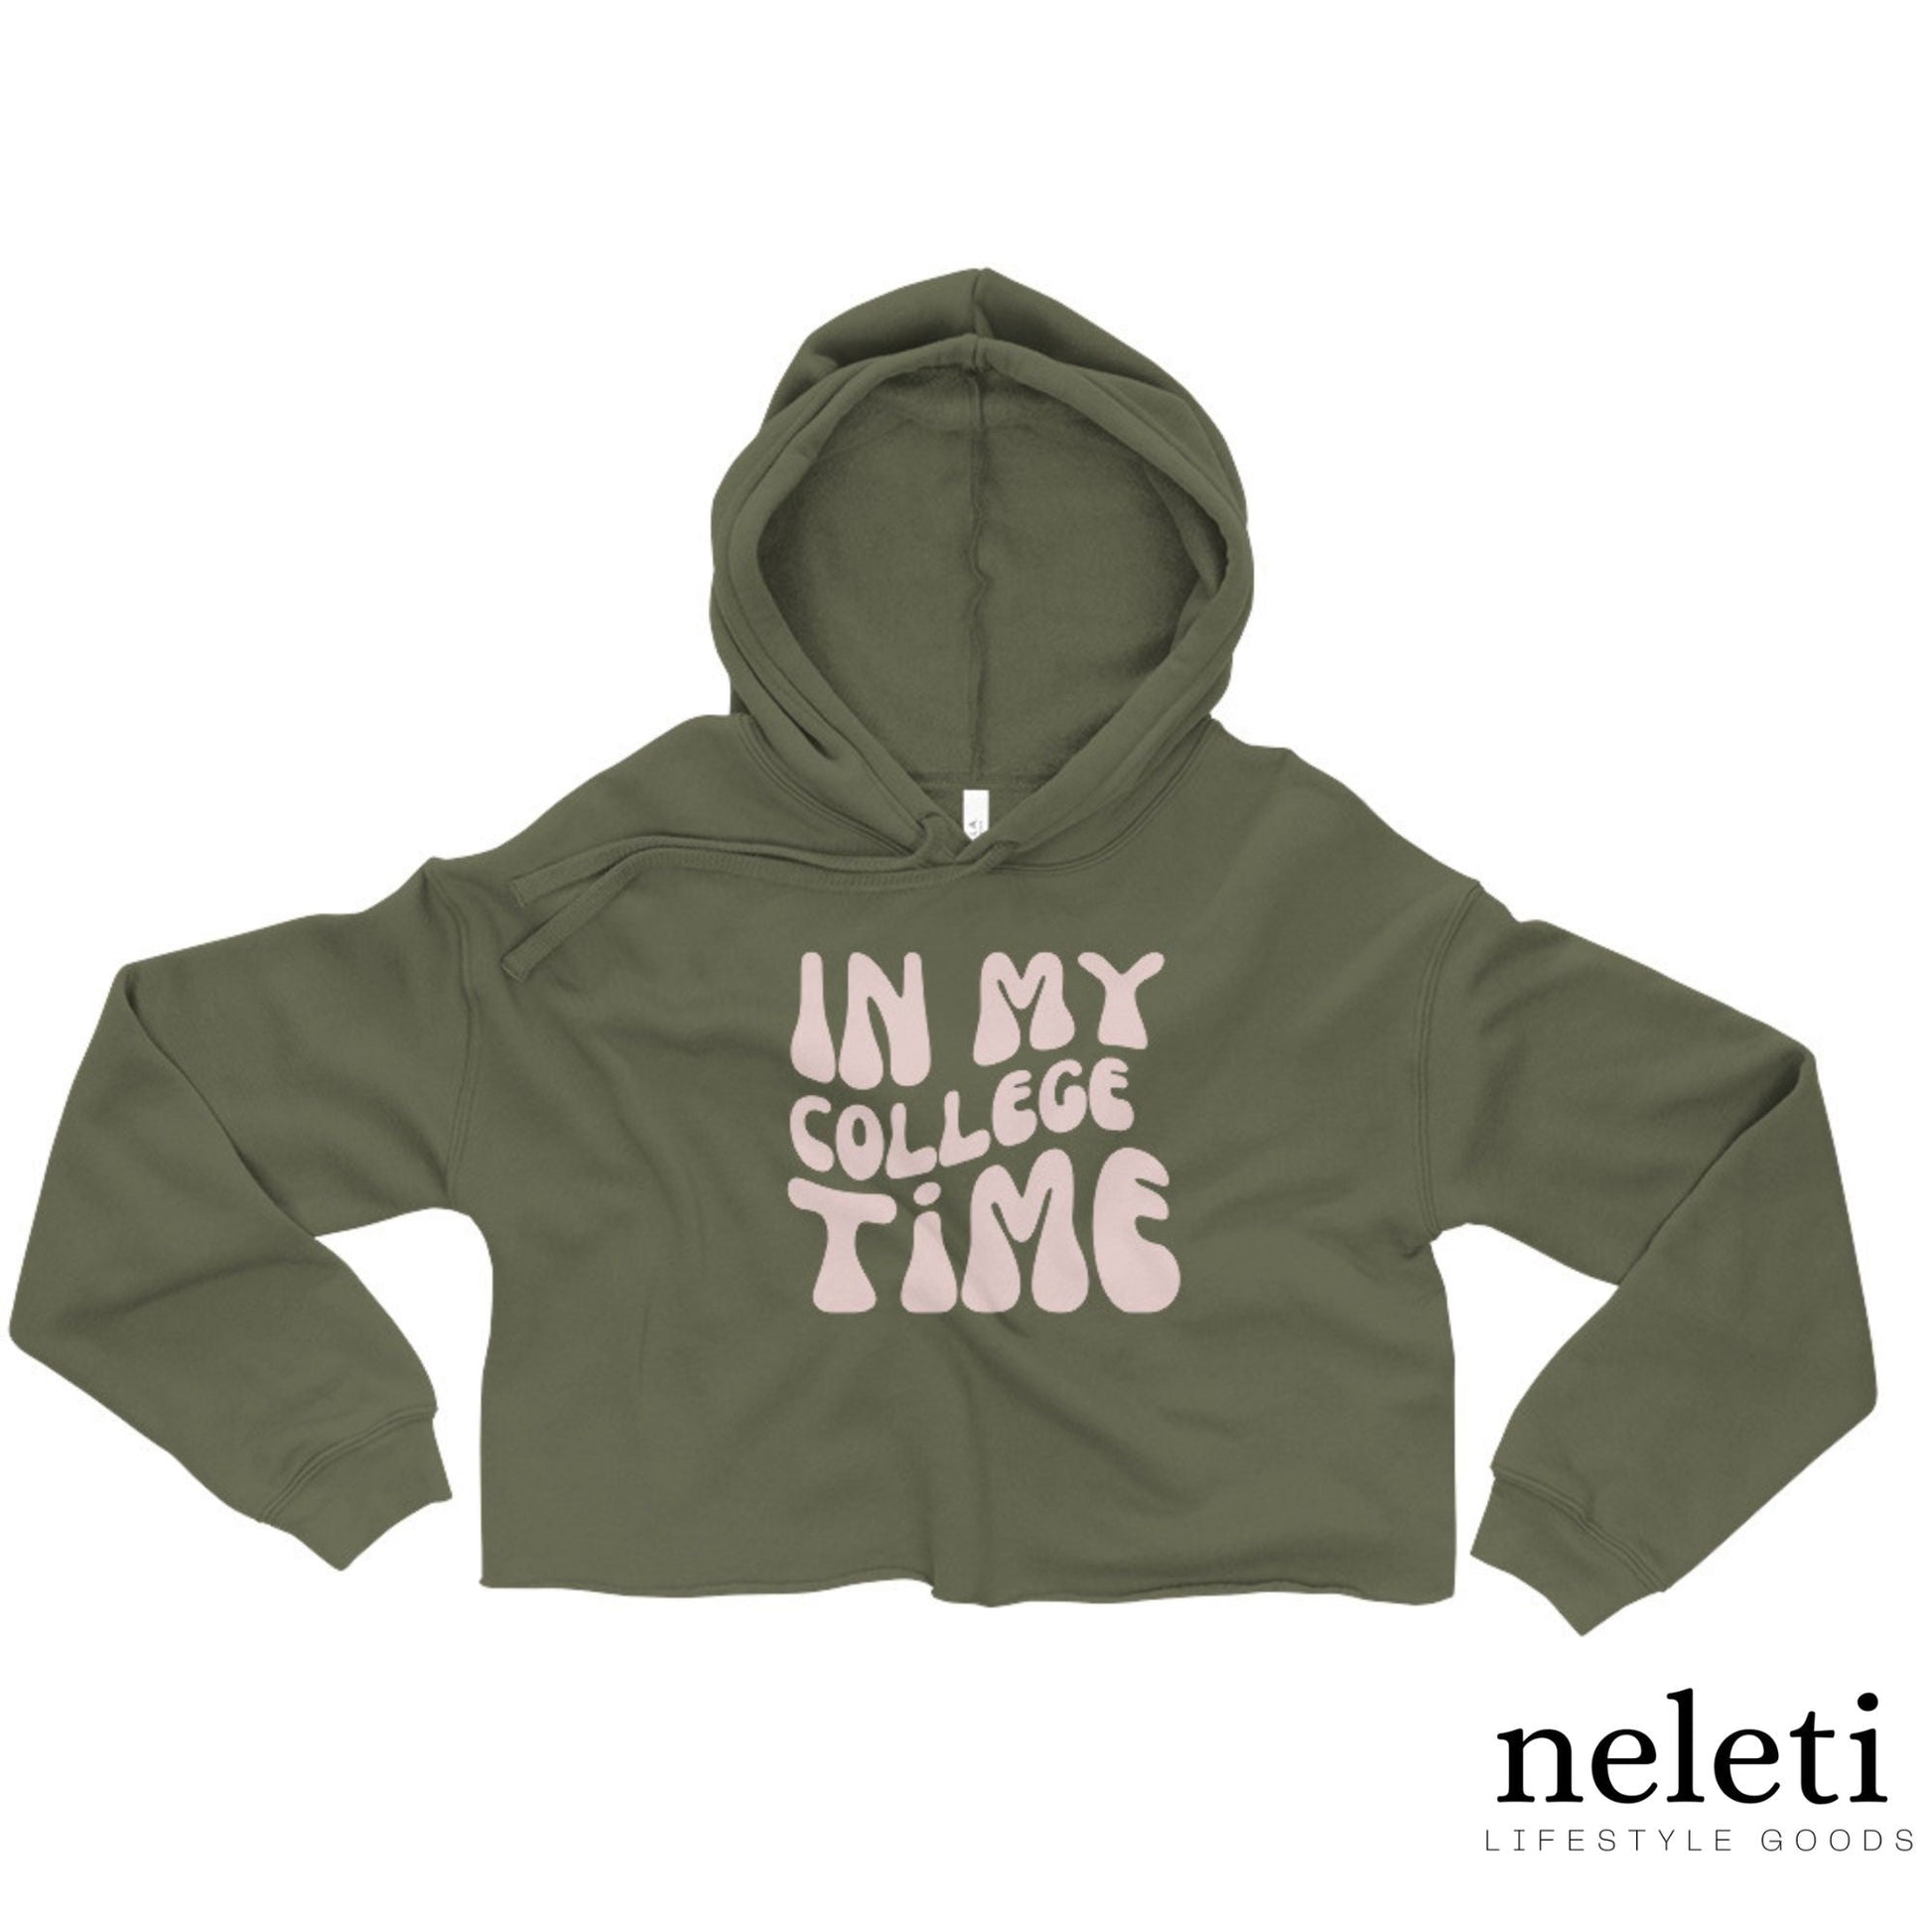    neleti.com-crop-hoodie